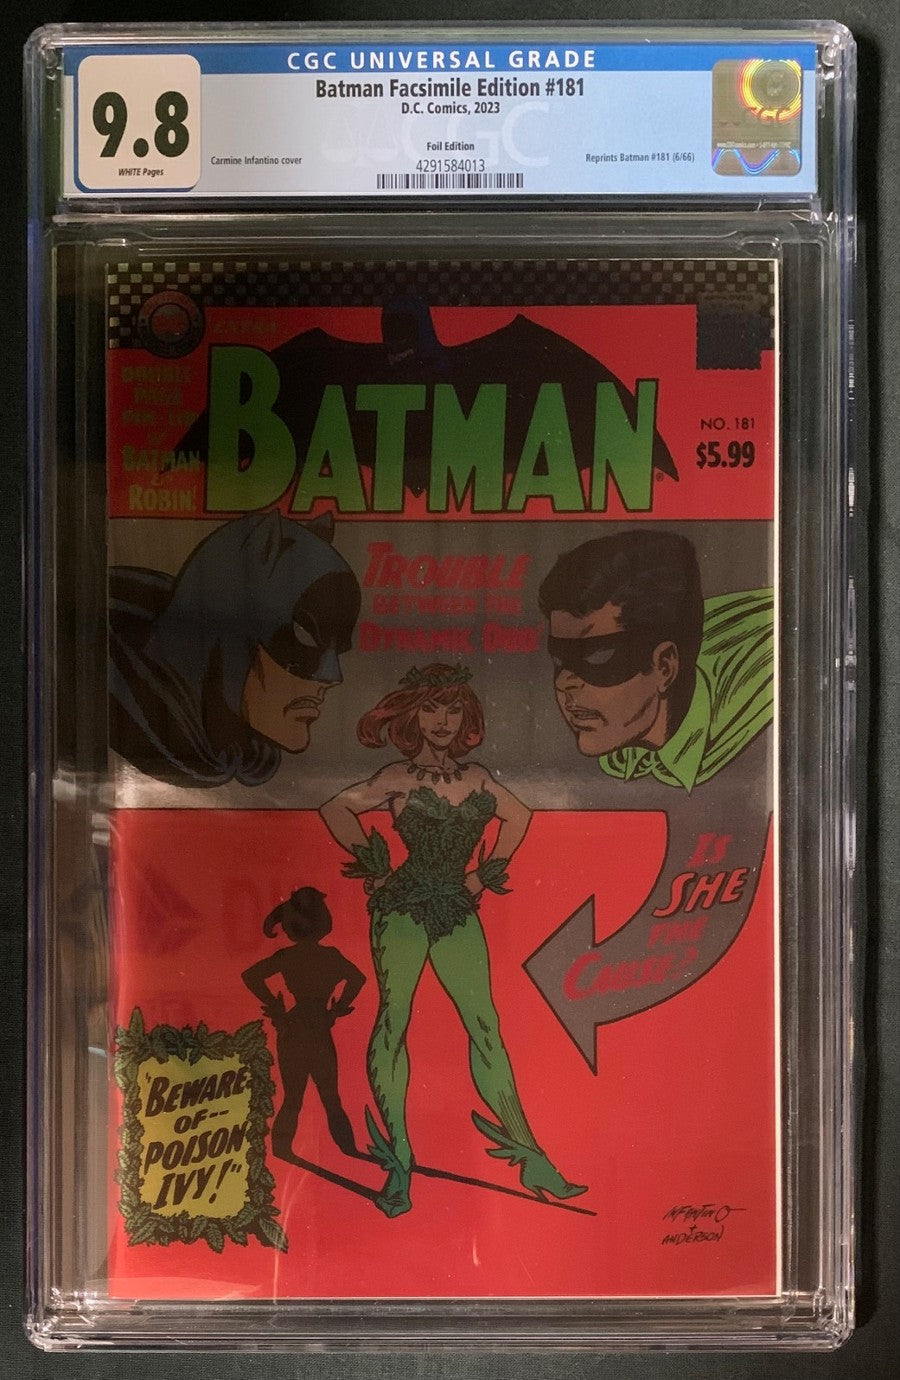 Batman Facsimile Edition #181 Foil Variant CGC Graded 9.8 (013)